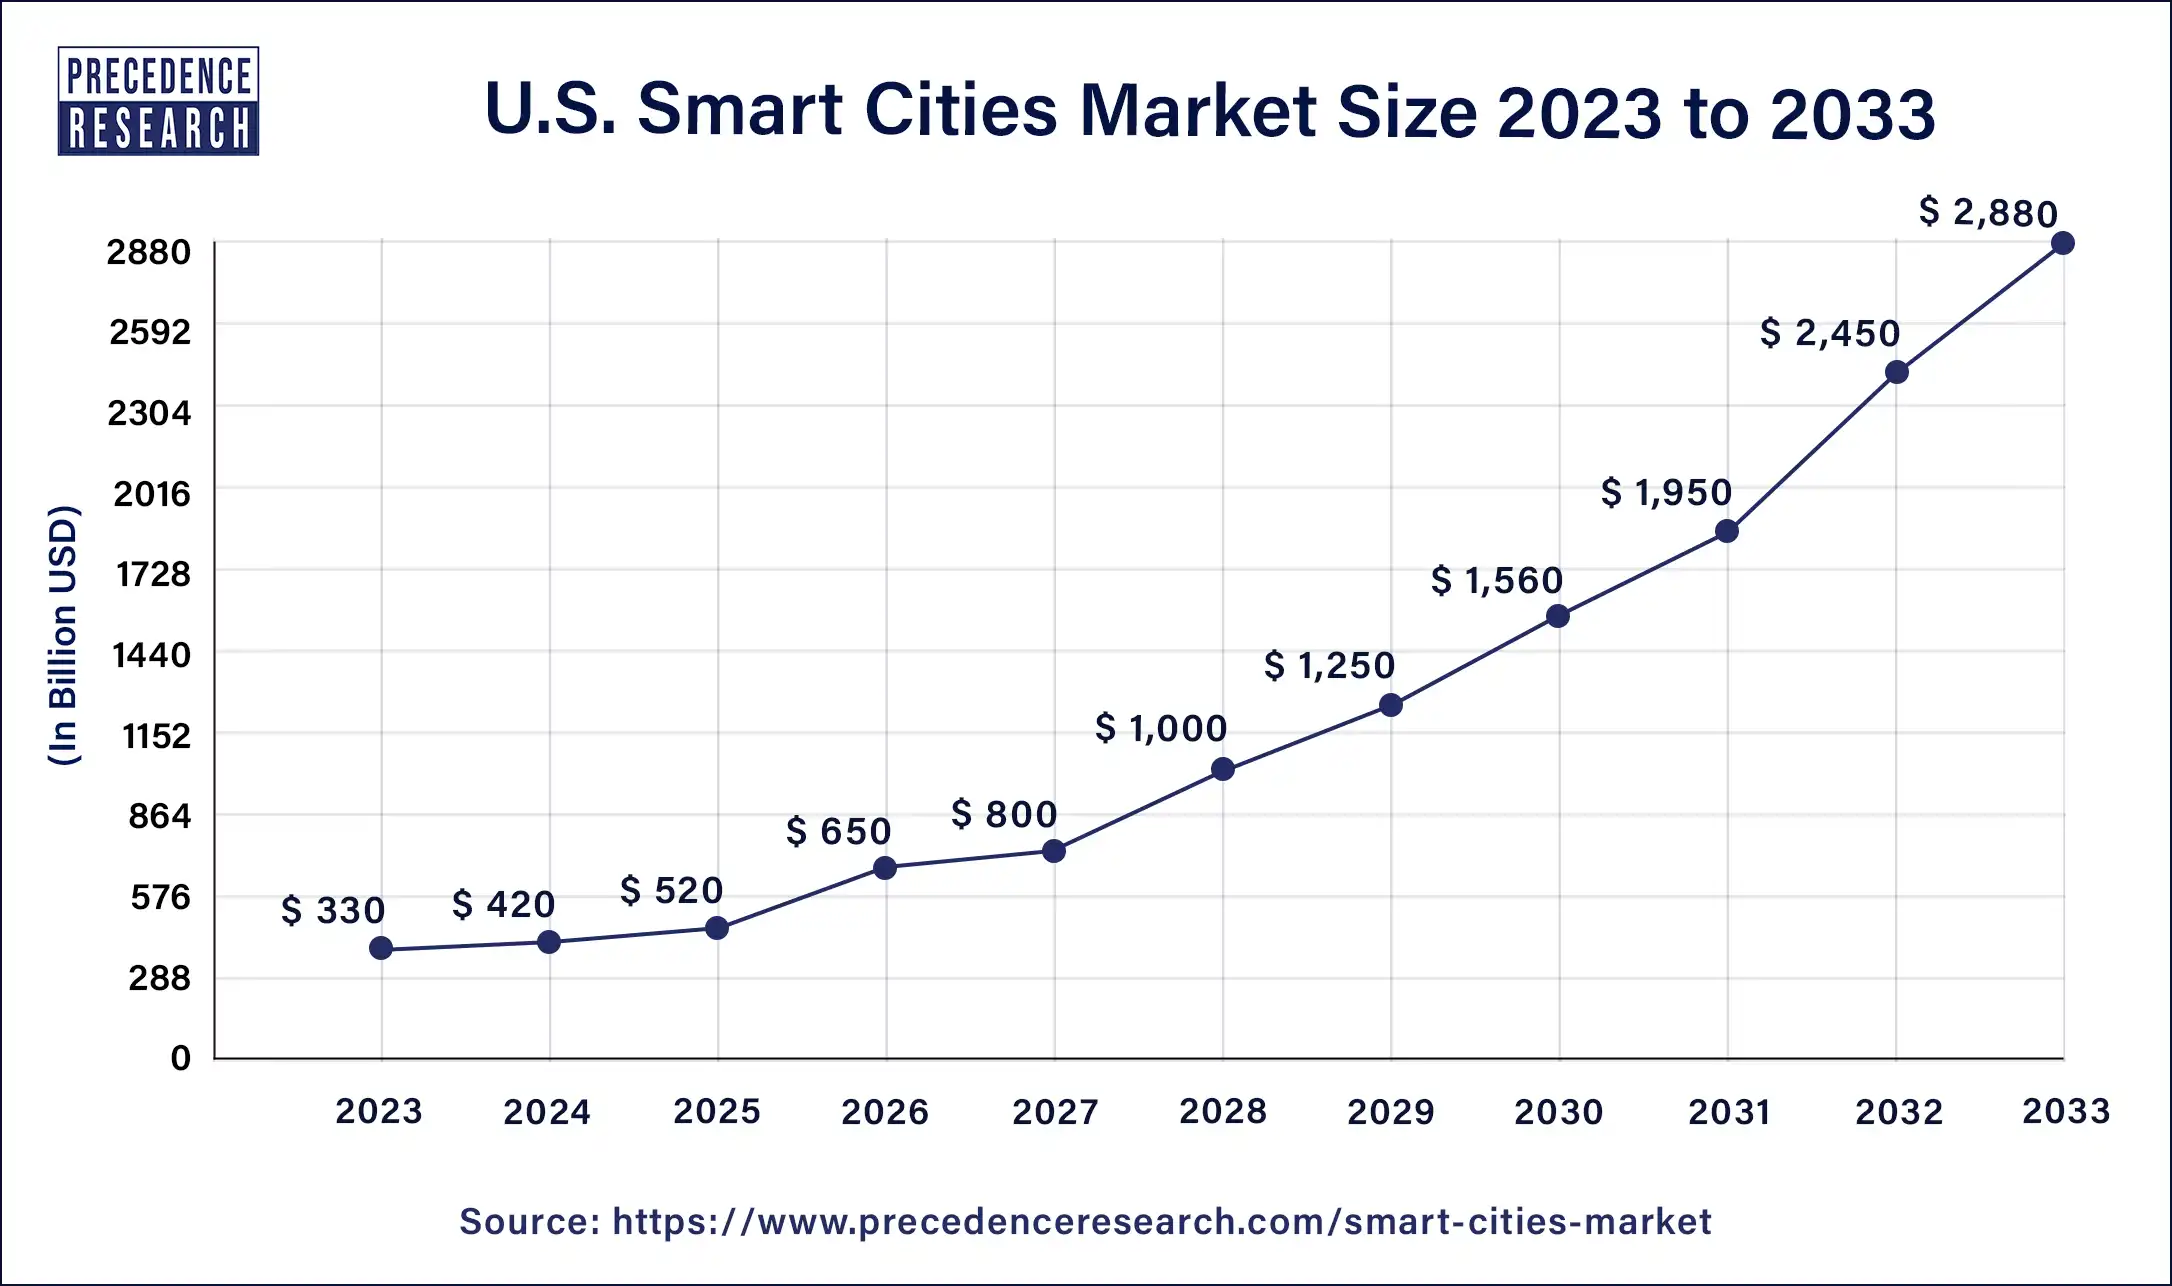 U.S. Smart Cities Market Size 2024 to 2033